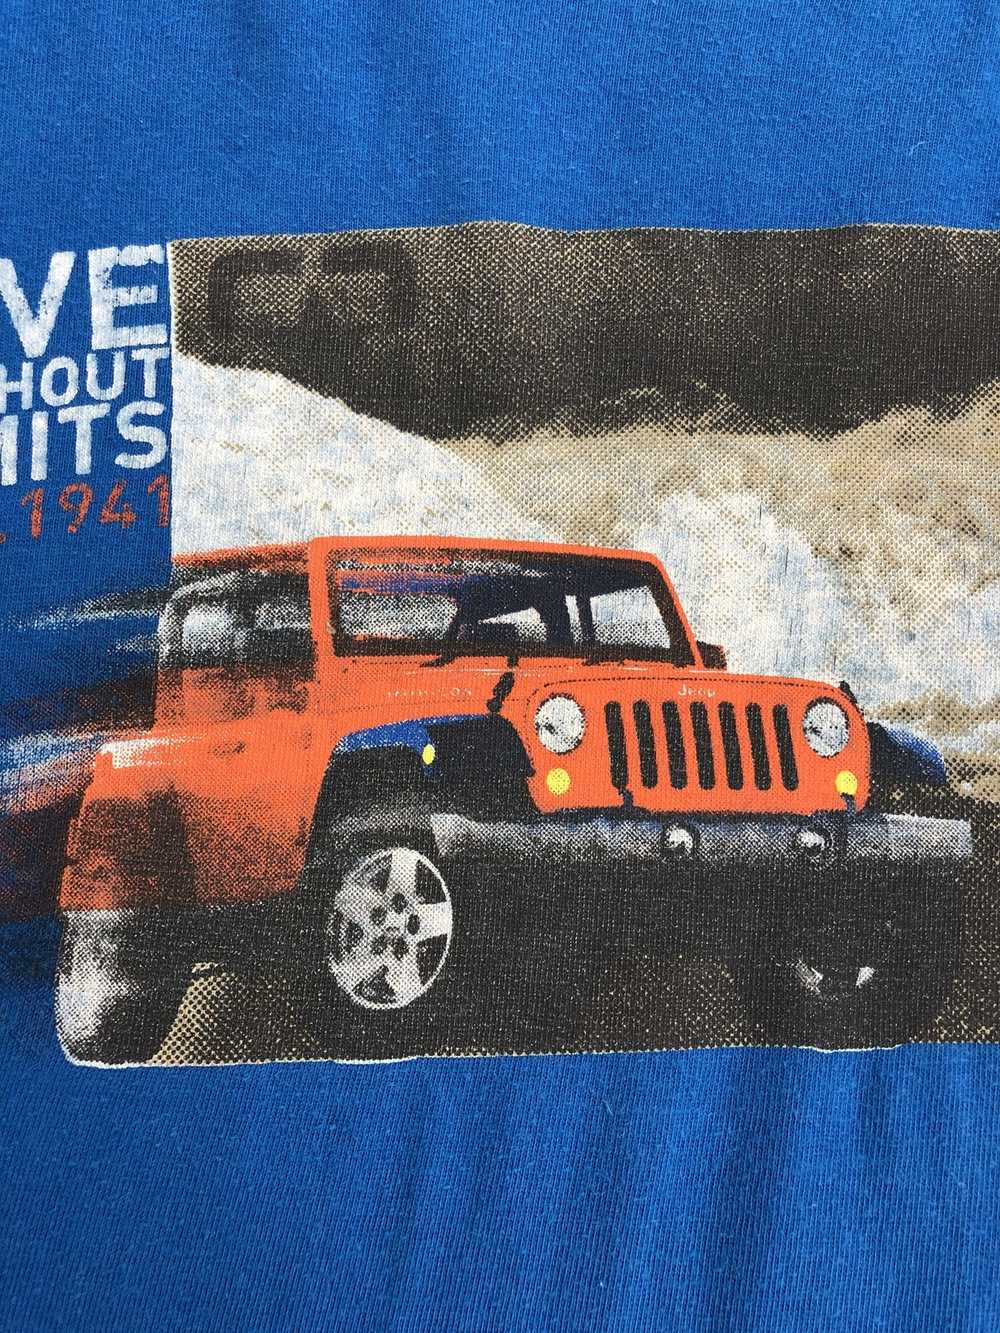 Jeep × Racing × Vintage Vintage Jeep t-shirt (Lan… - image 5